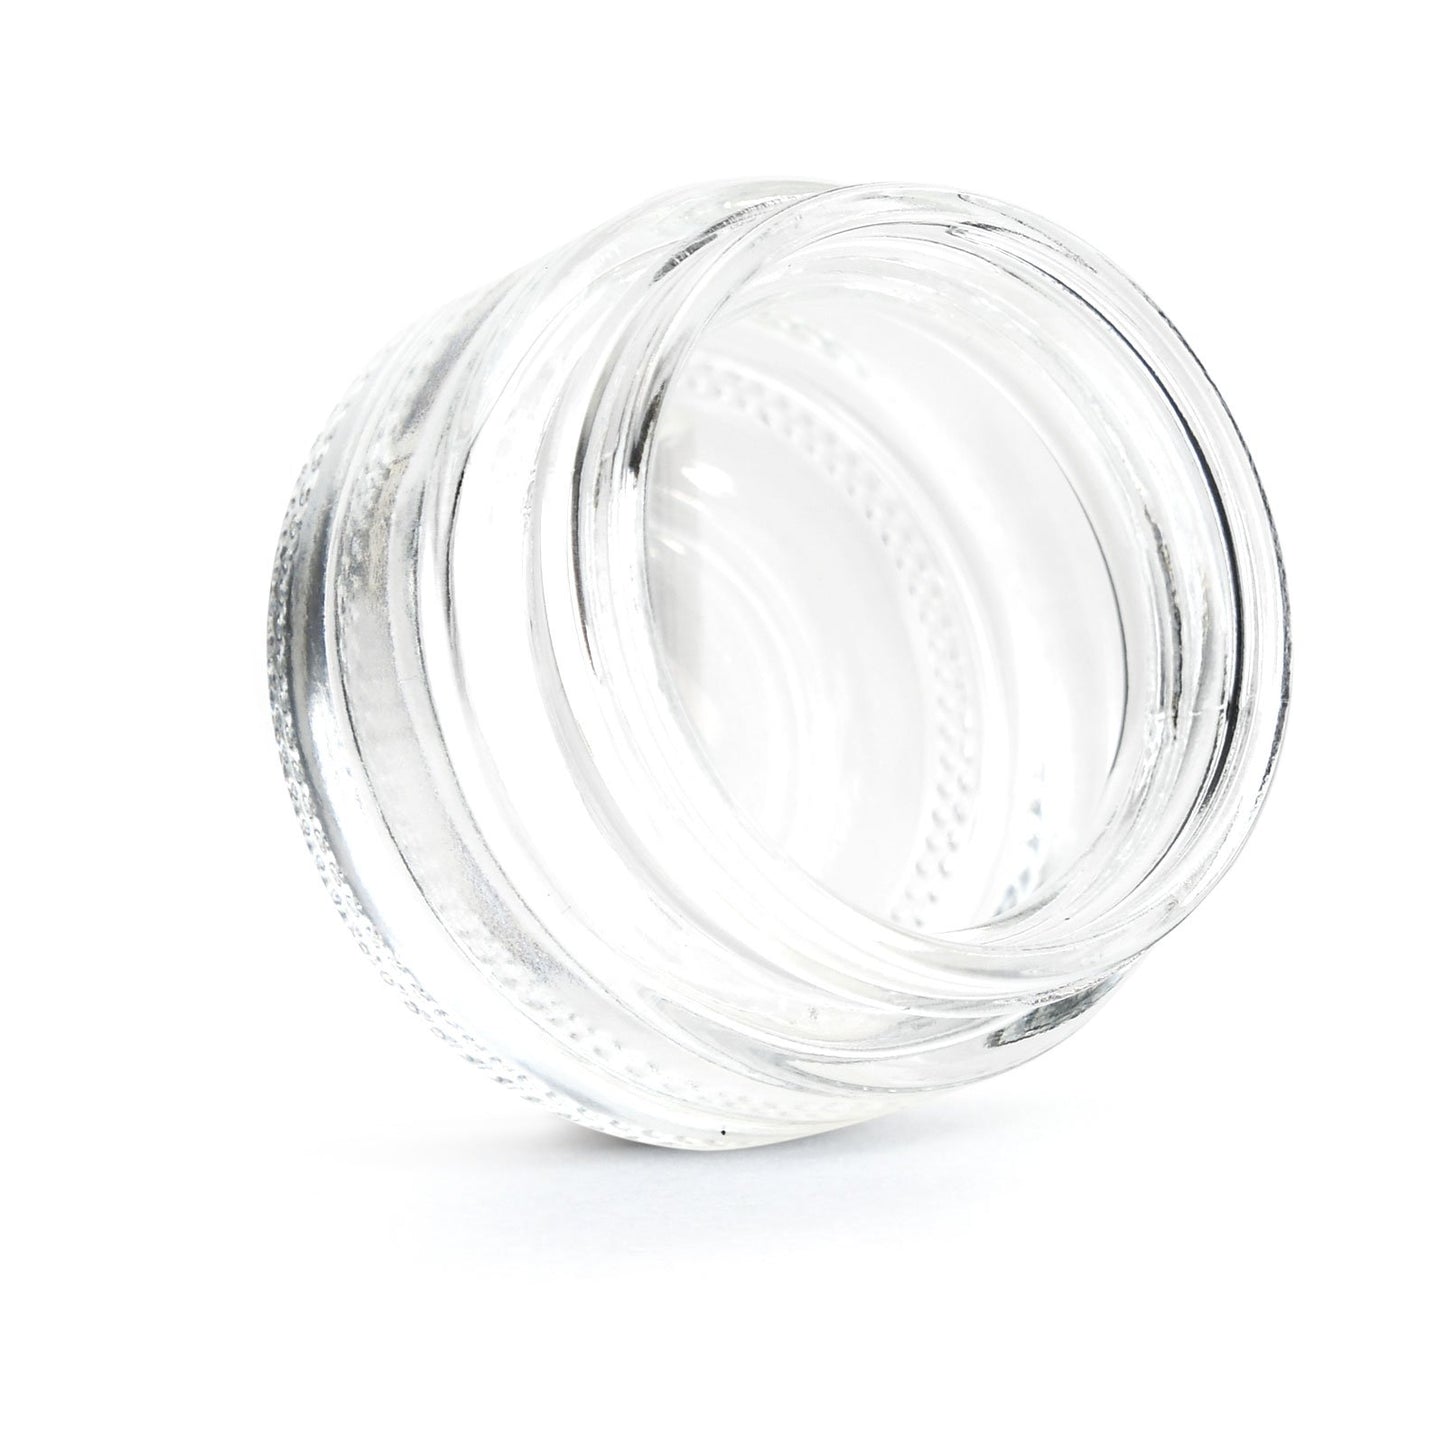 1oz Child Resistant Glass Jars with Black Caps 1-2 Grams 200 COUNT